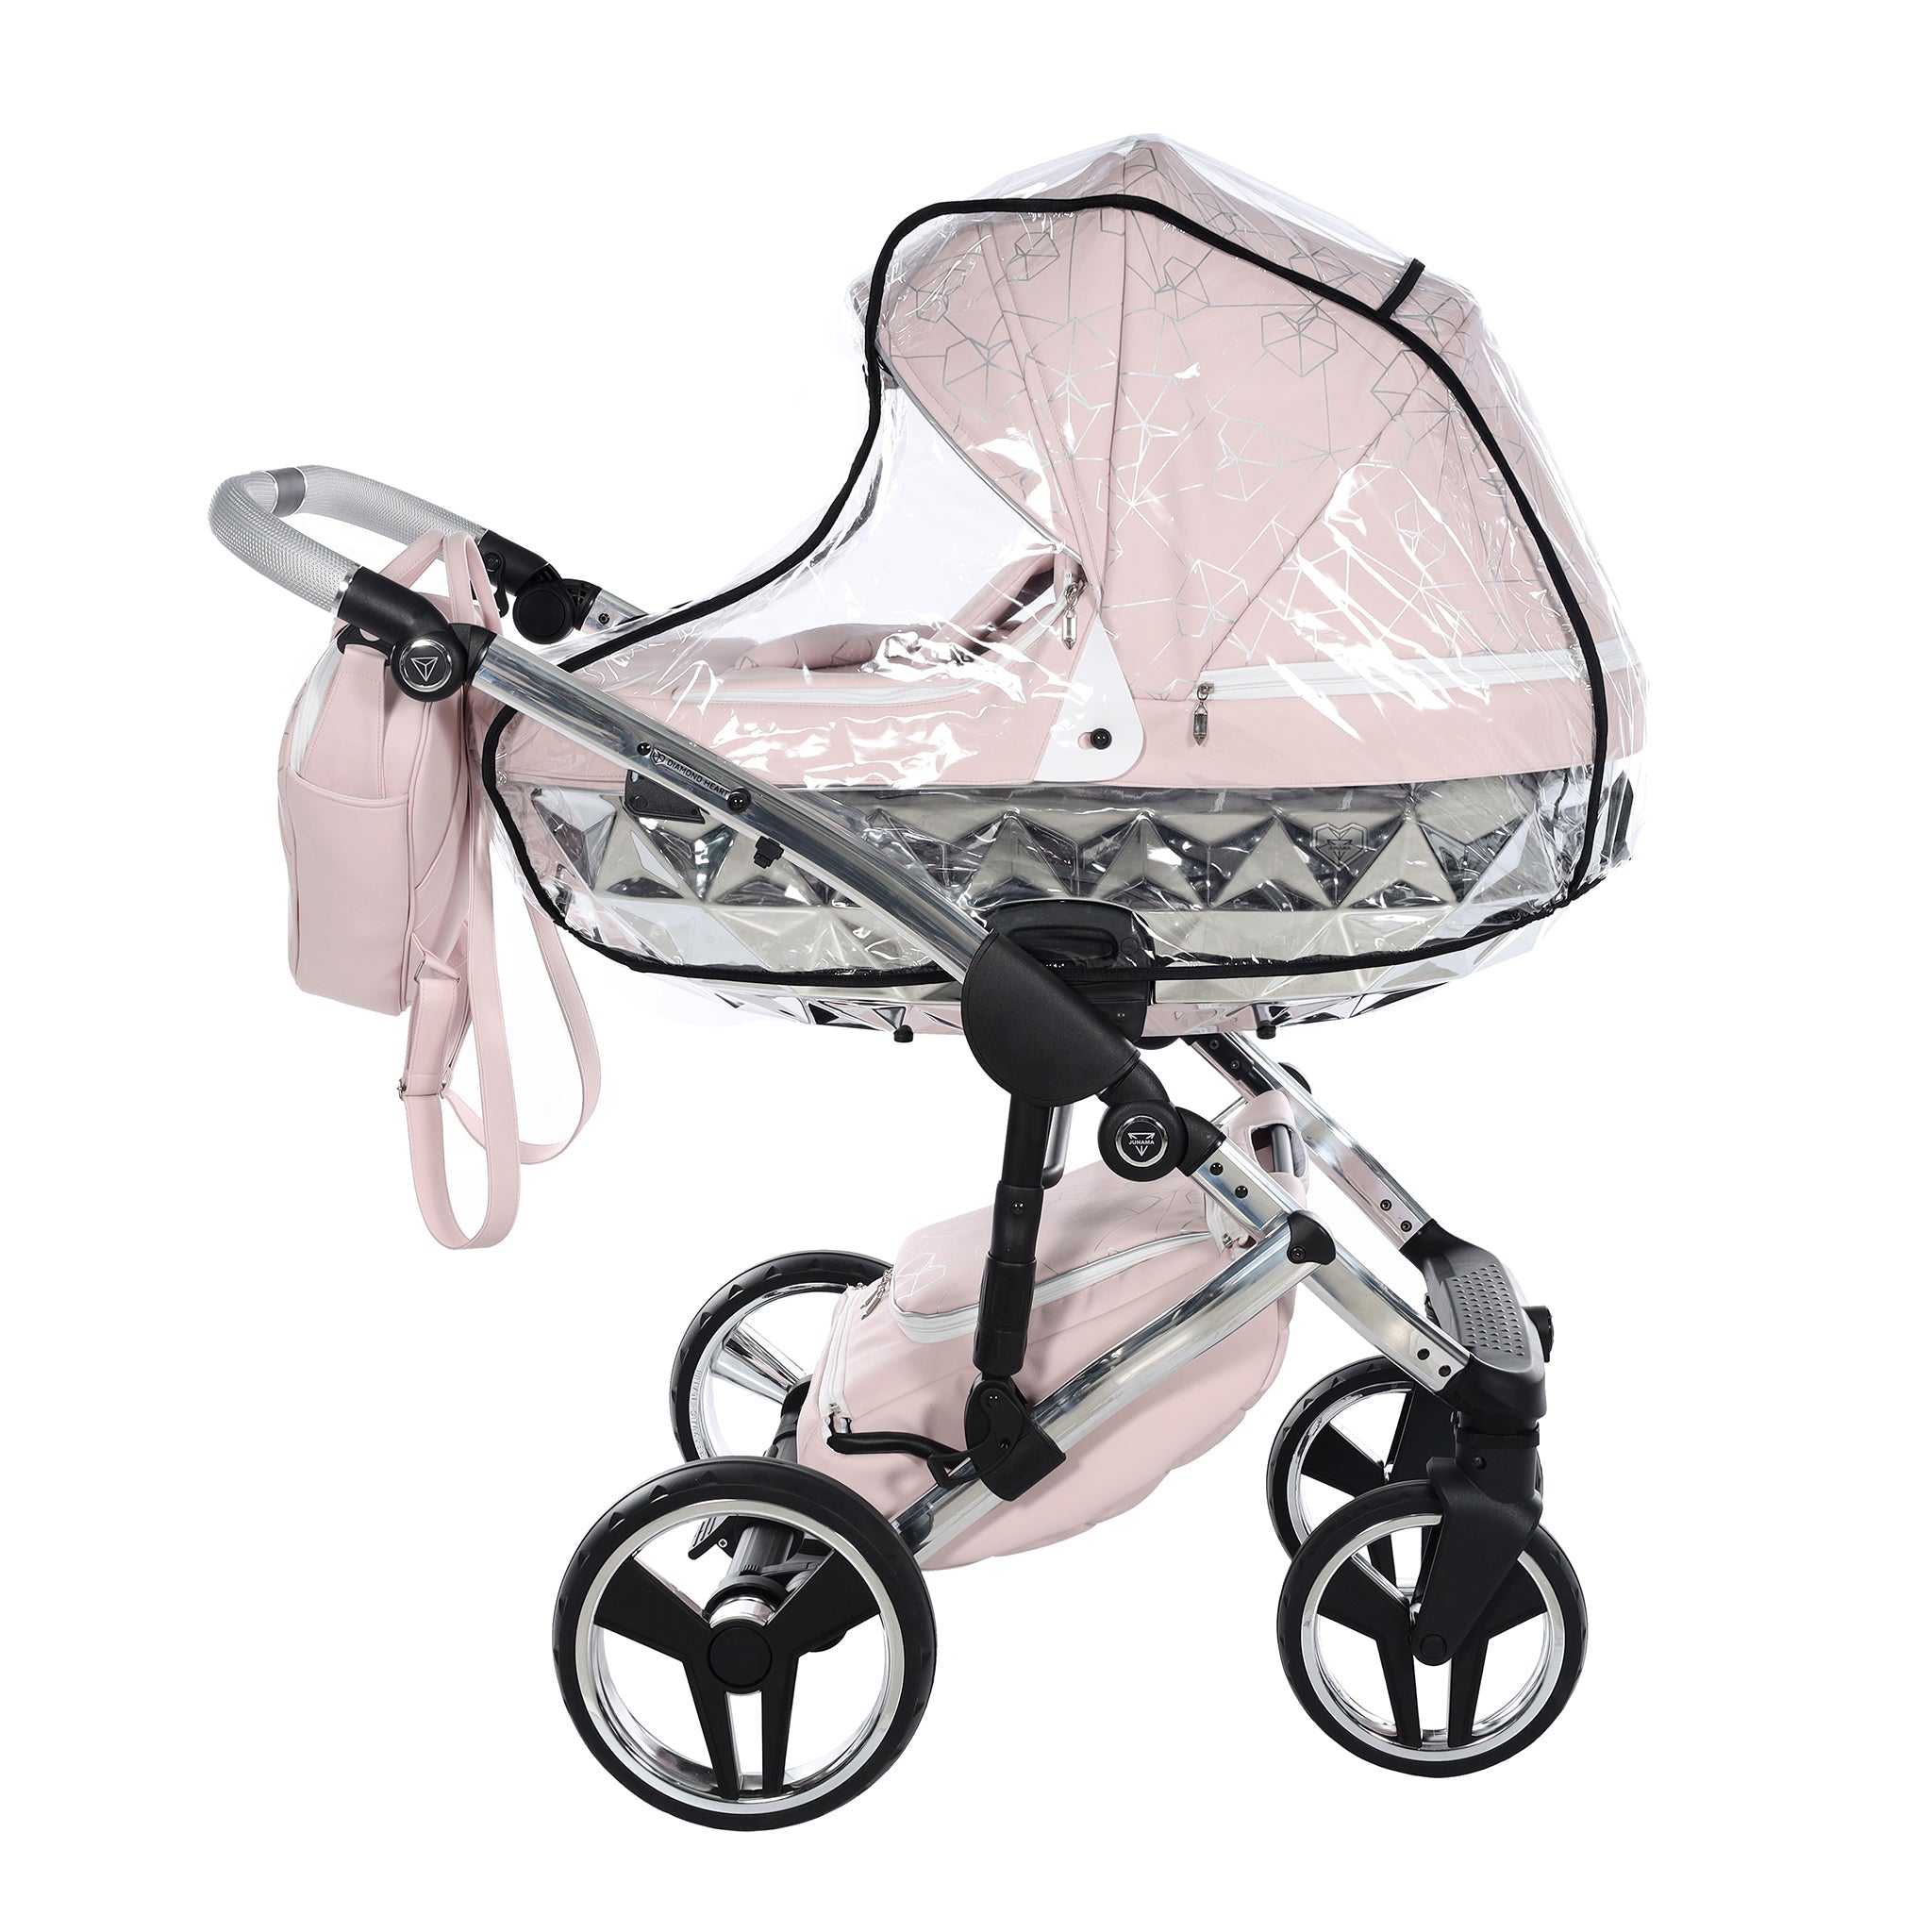 Junama Heart, baby prams or stroller 2 in 1 - Pink and Silver, Code number: JUNHERT06